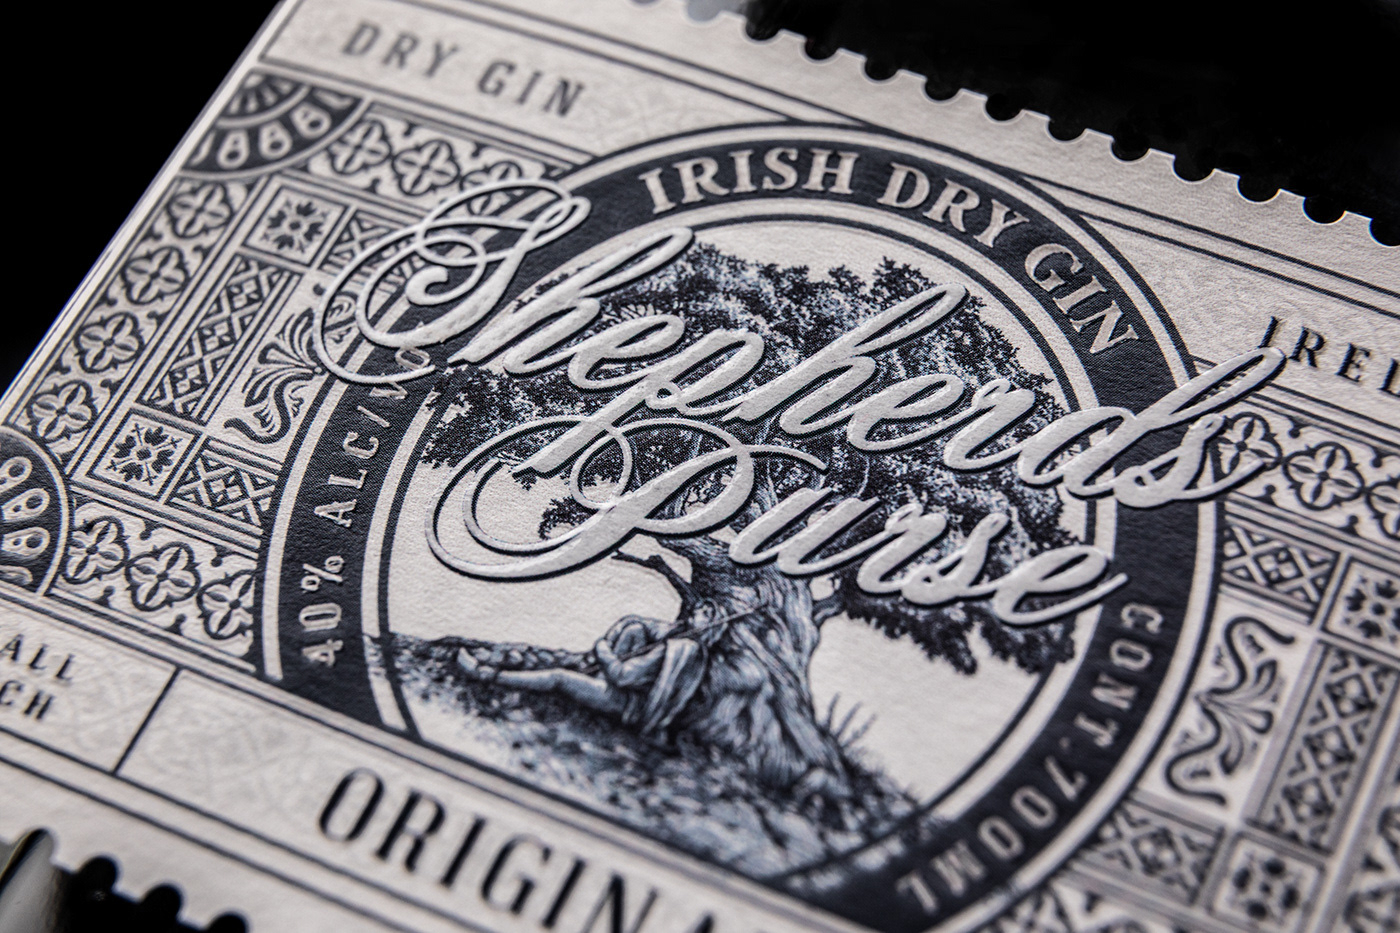 gin premium Label Whiskey alcohol Packaging wine vintage Retro engraving